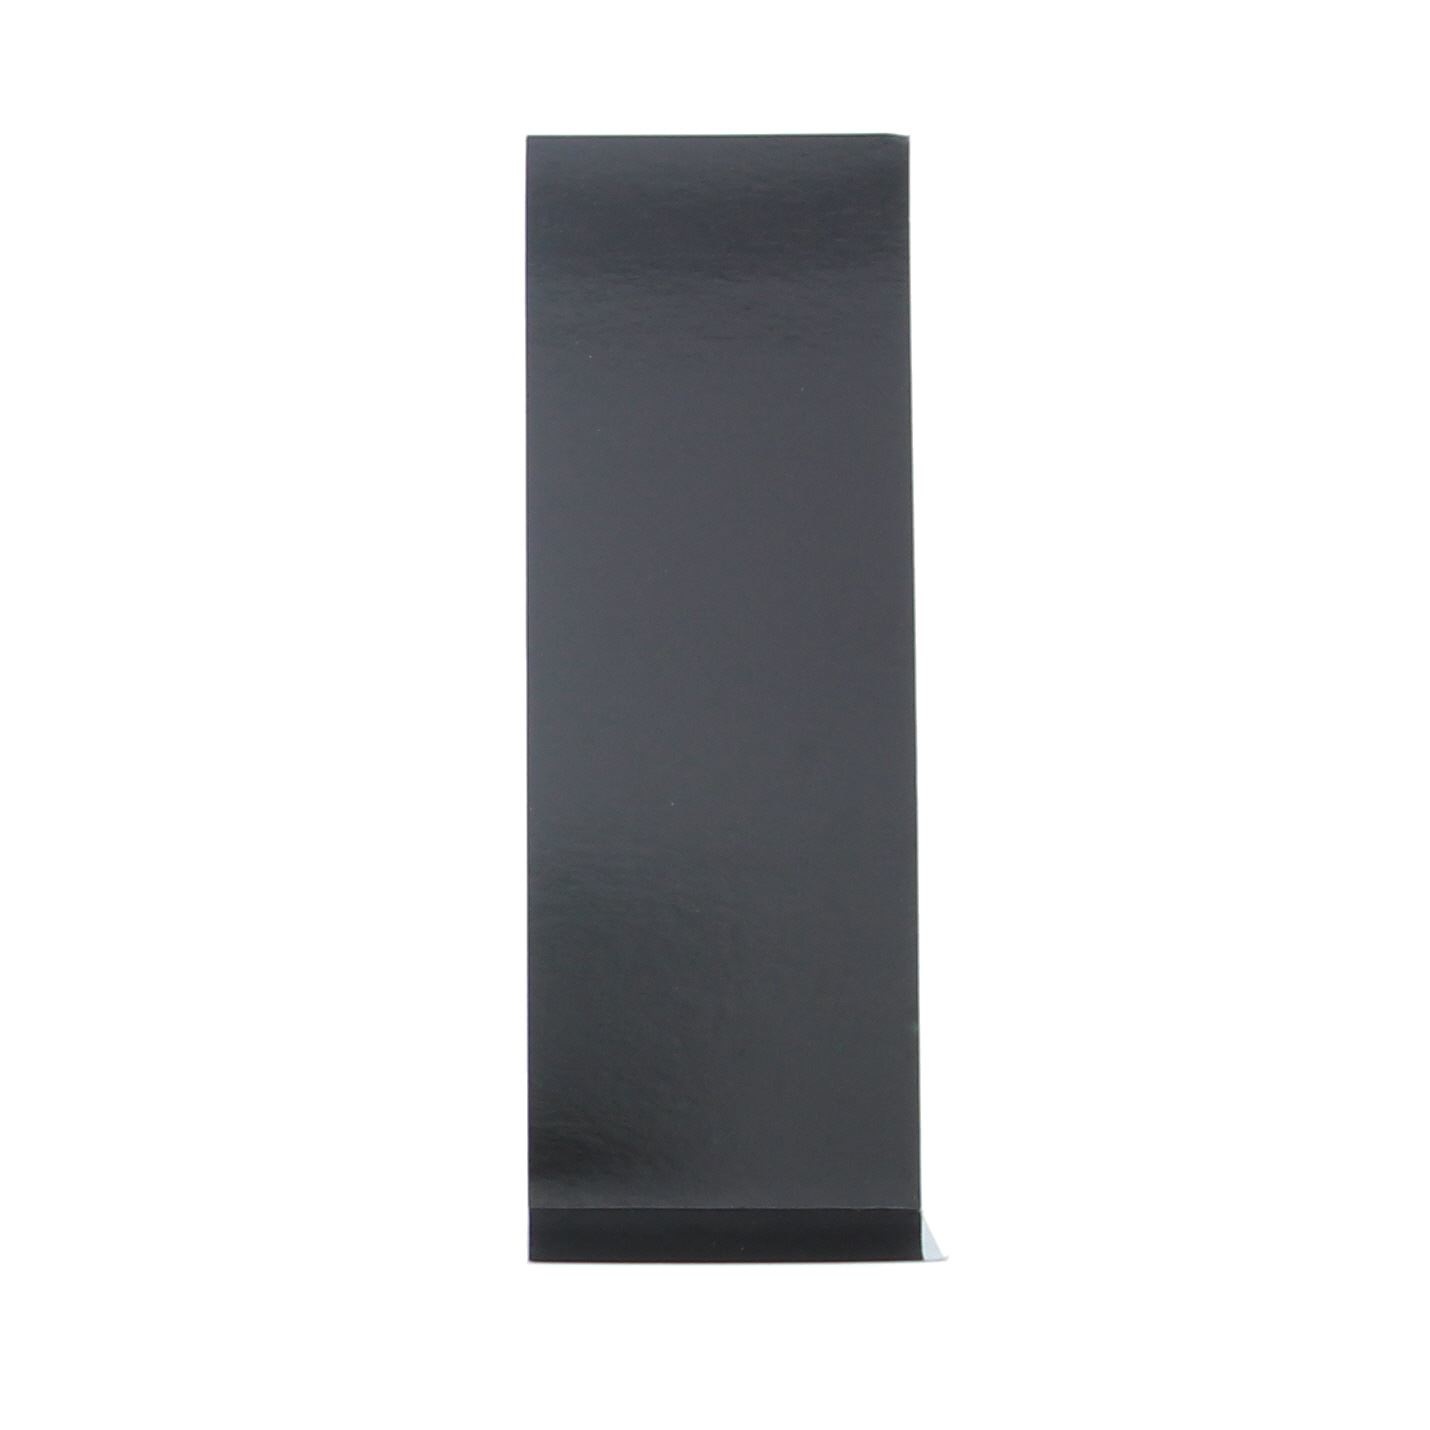 J-Cardboard - Black - 77*50*215mm  - 100 pieces